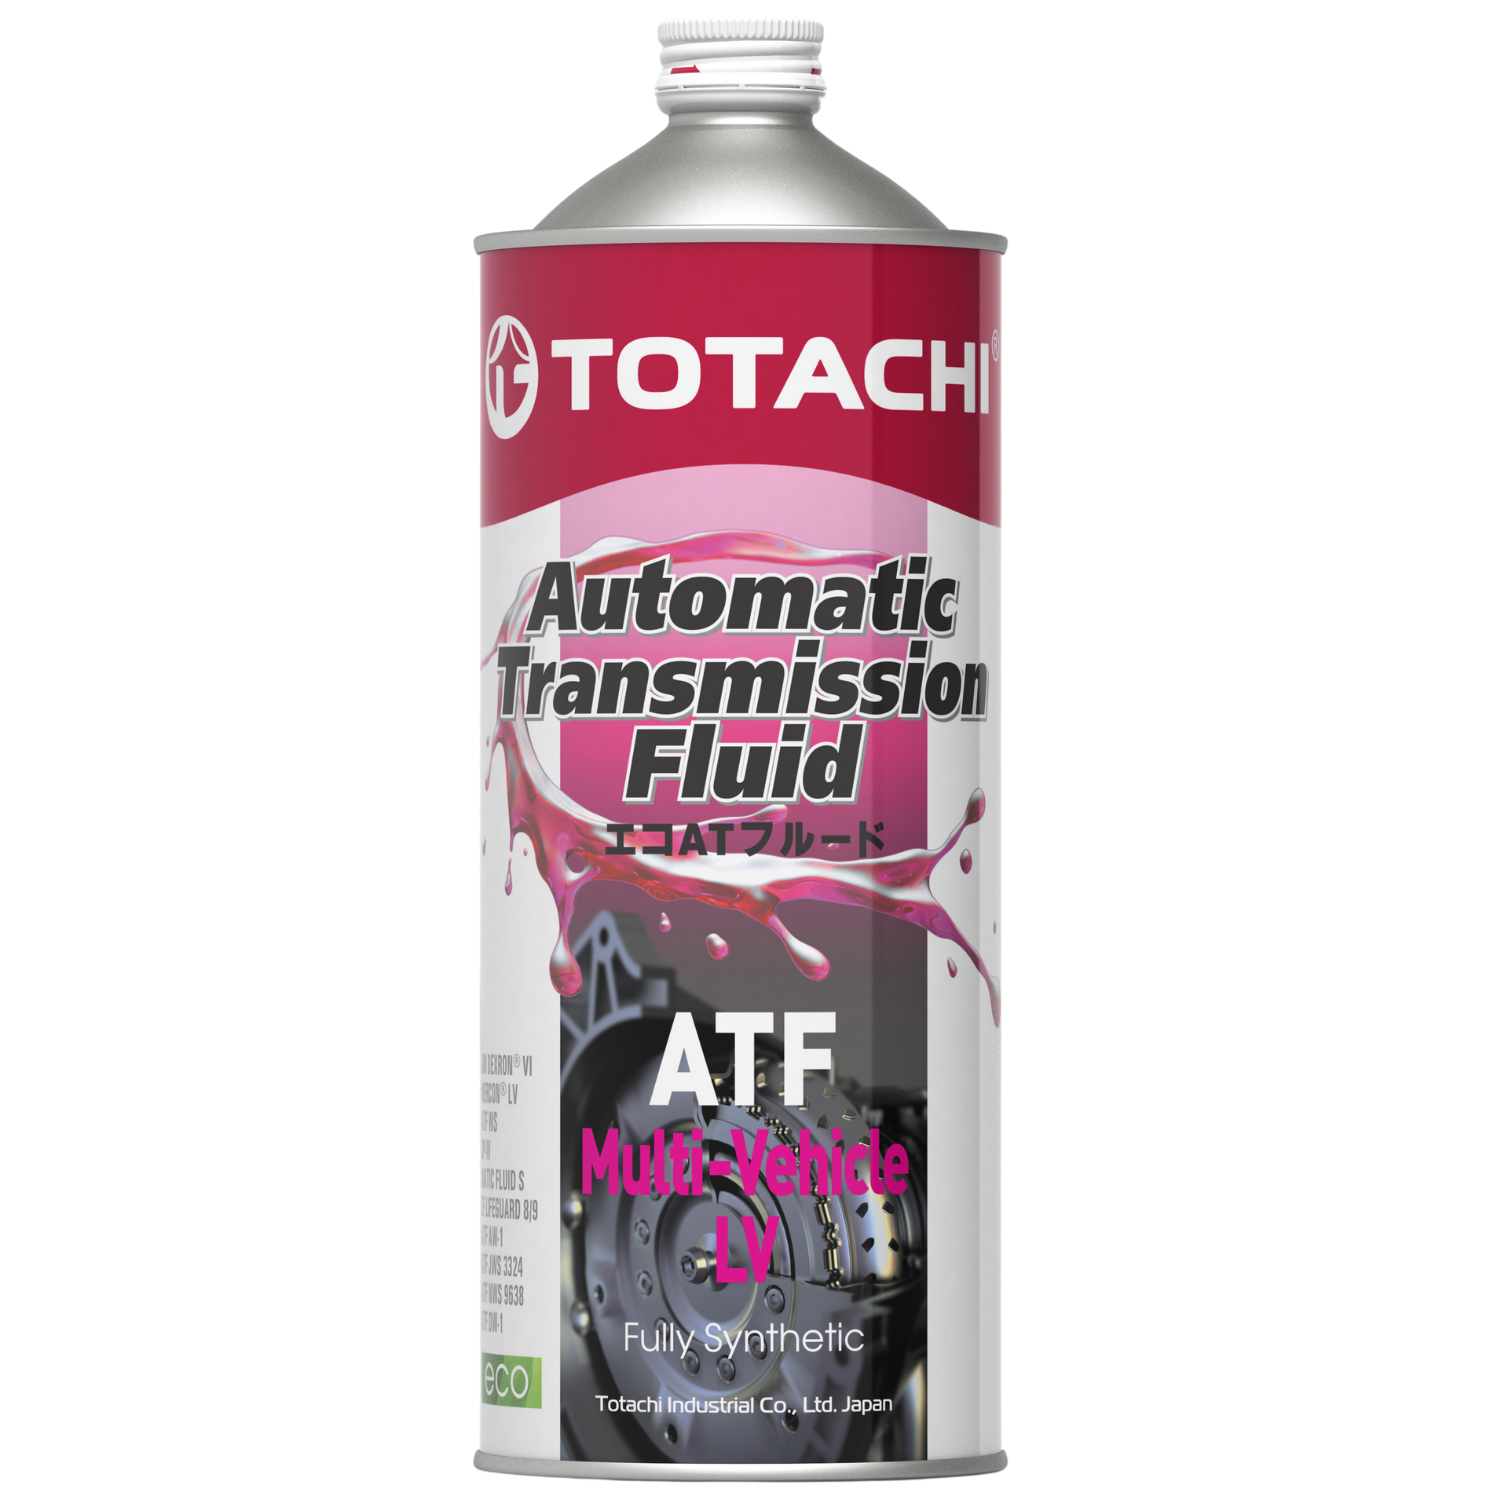  Totachi ATF Multi-Vehicle LV